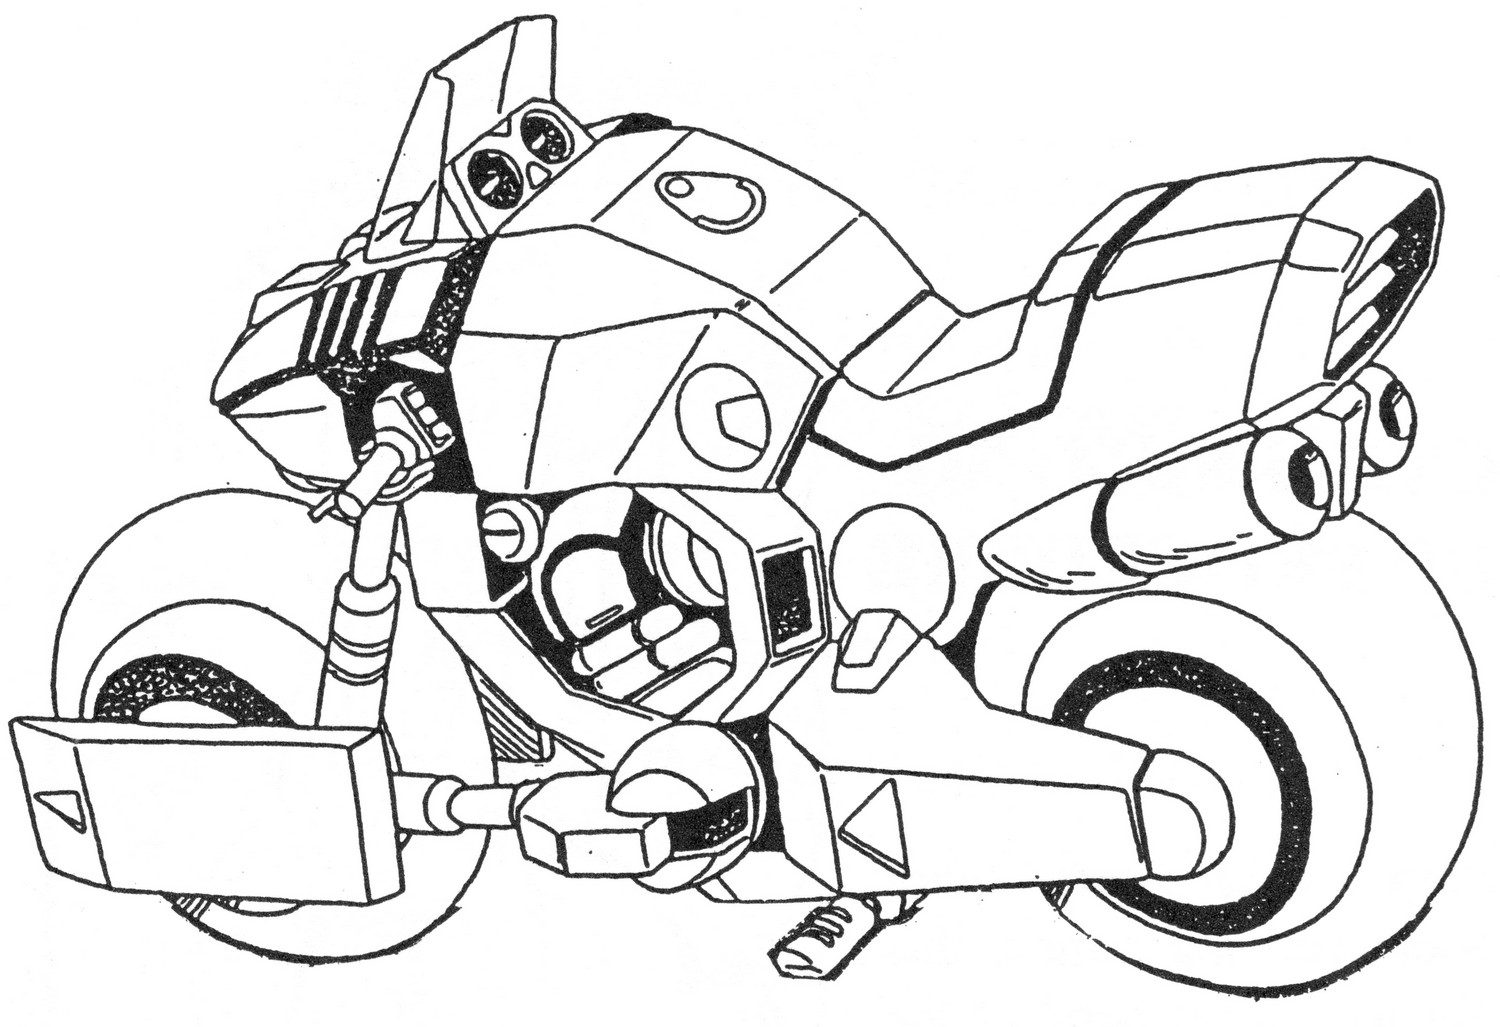 vr-052t-armorbike-rear